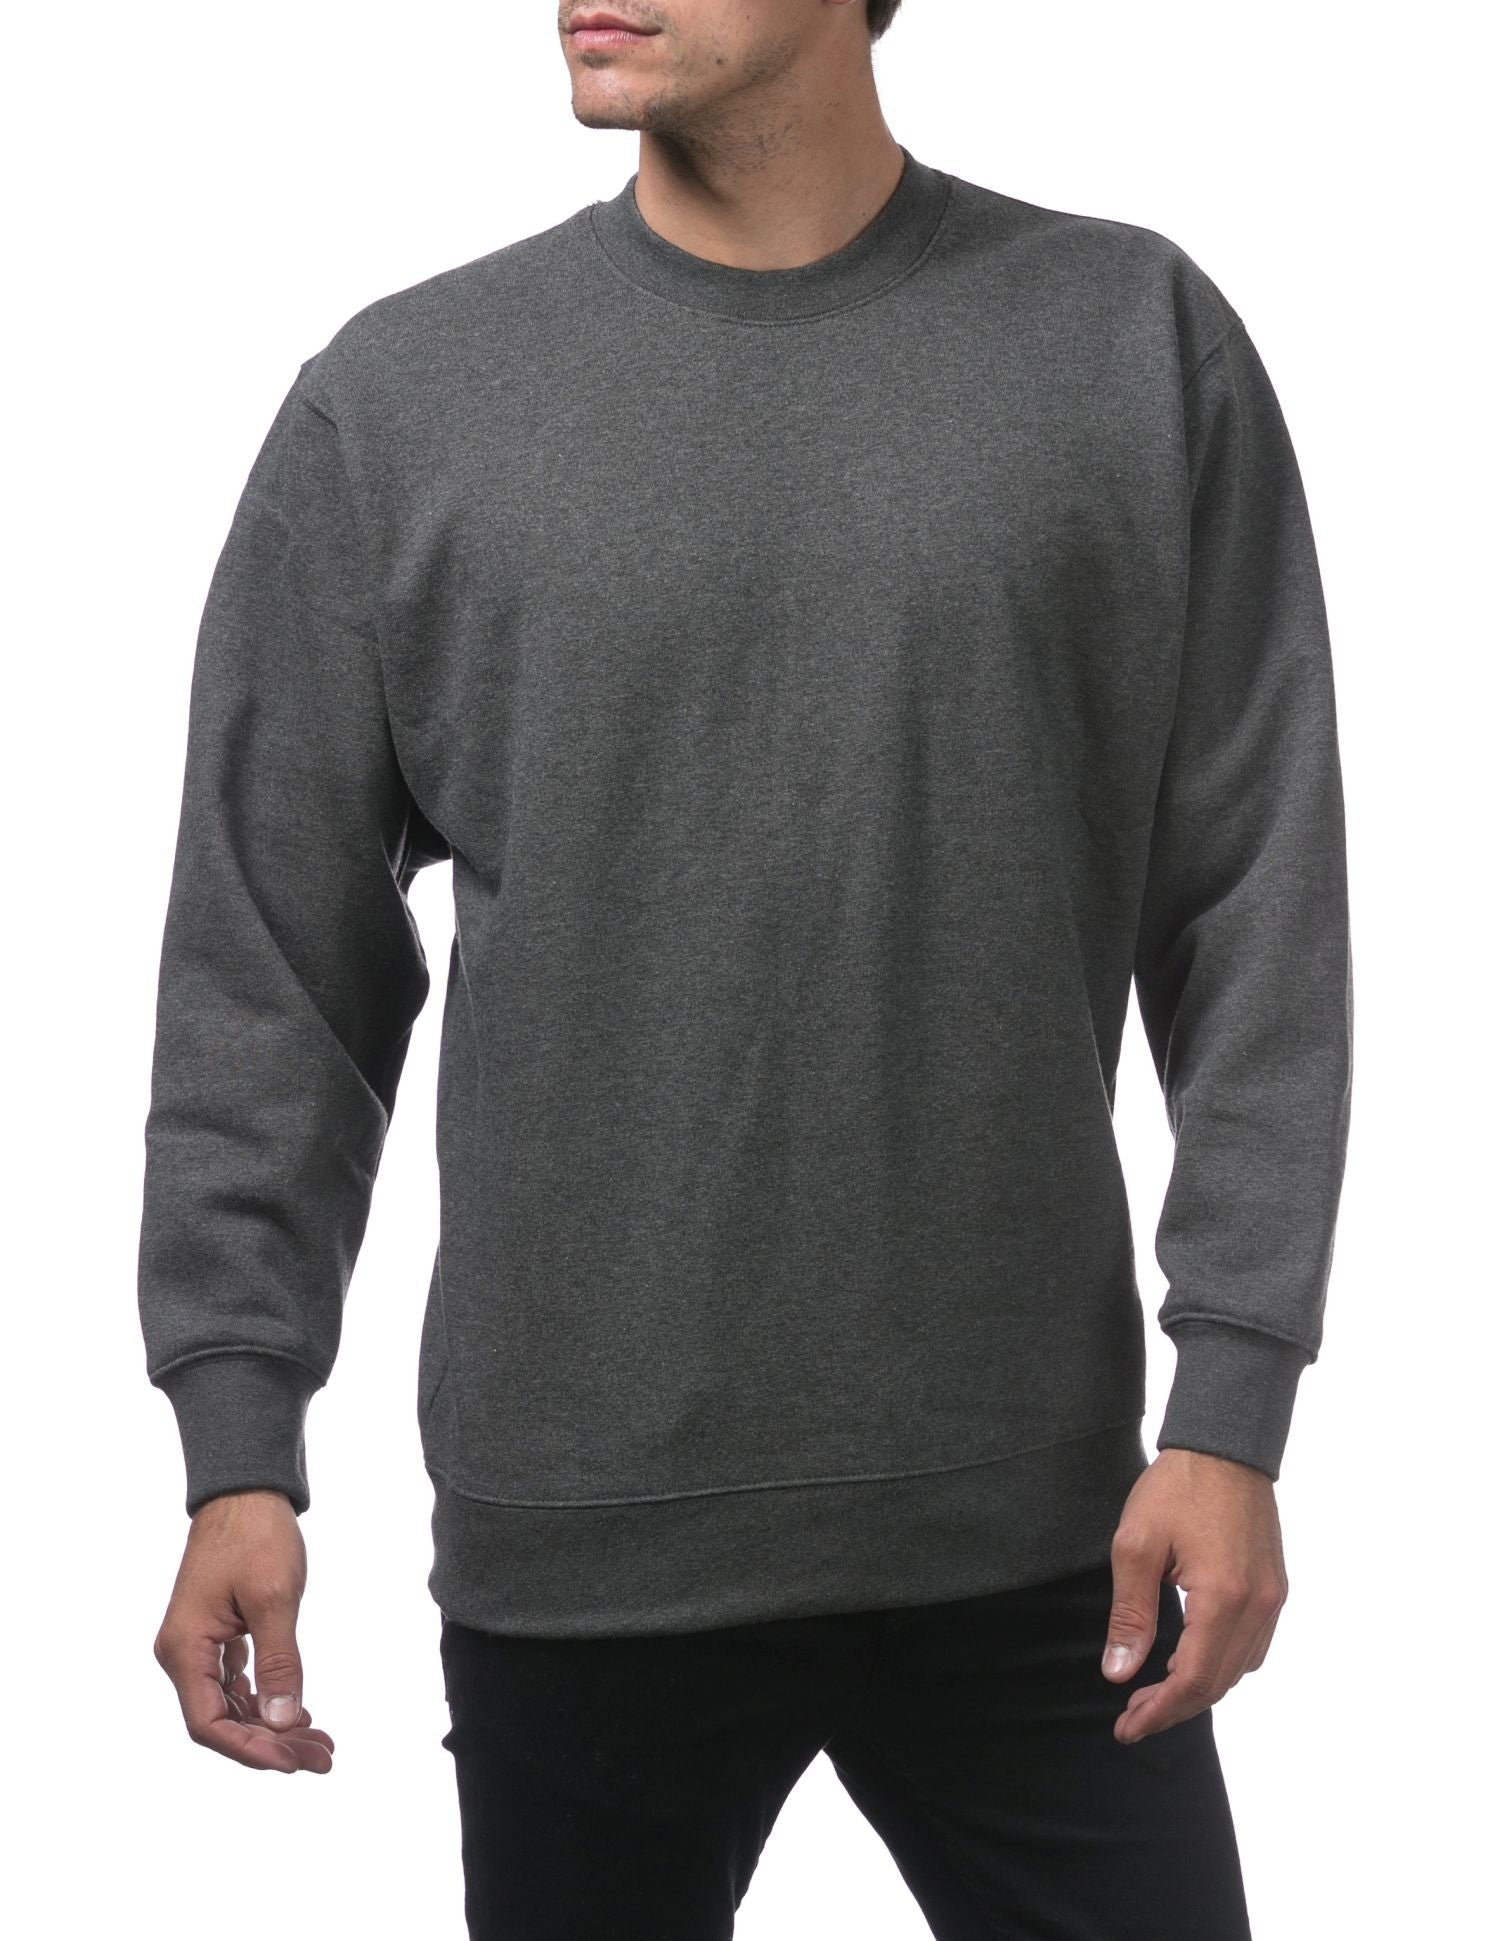 Pro Club Men's Comfort Crew Neck Fleece Pullover Sweater - Charcoal - Large - Pro-Distributing